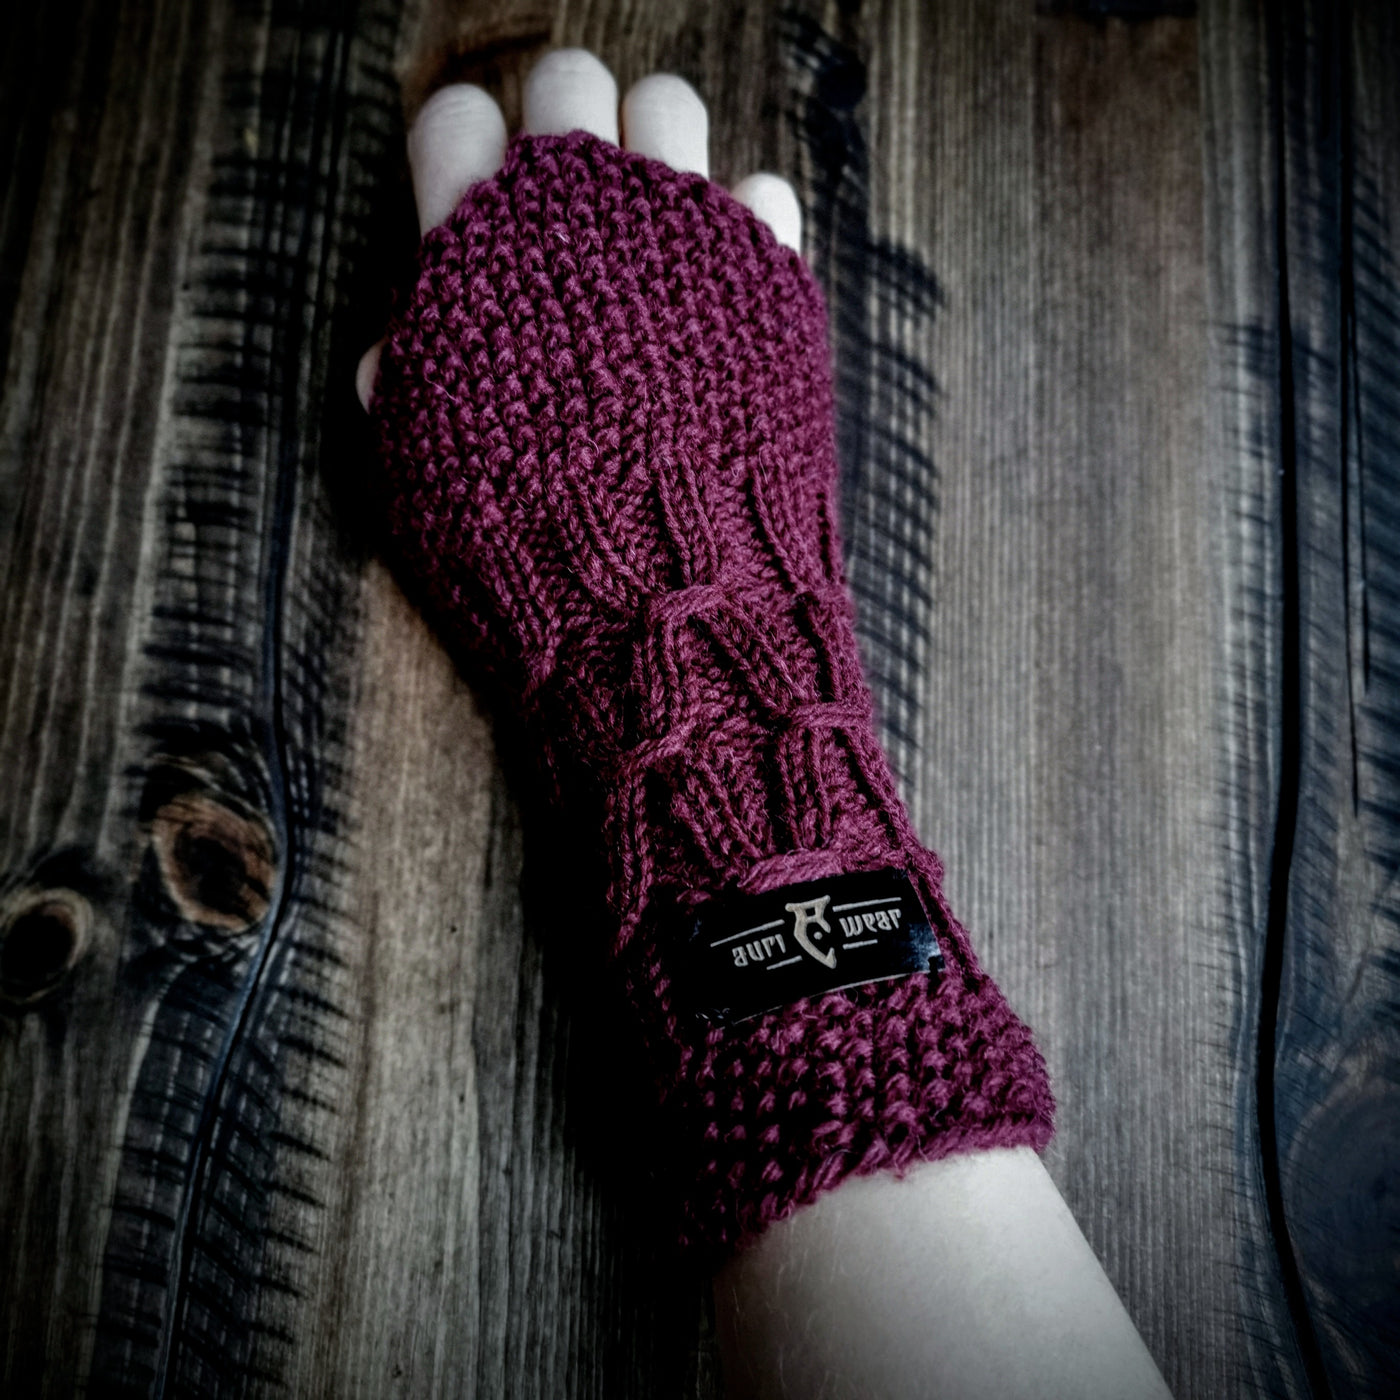 Handmade knitted plum purple wrist warmers